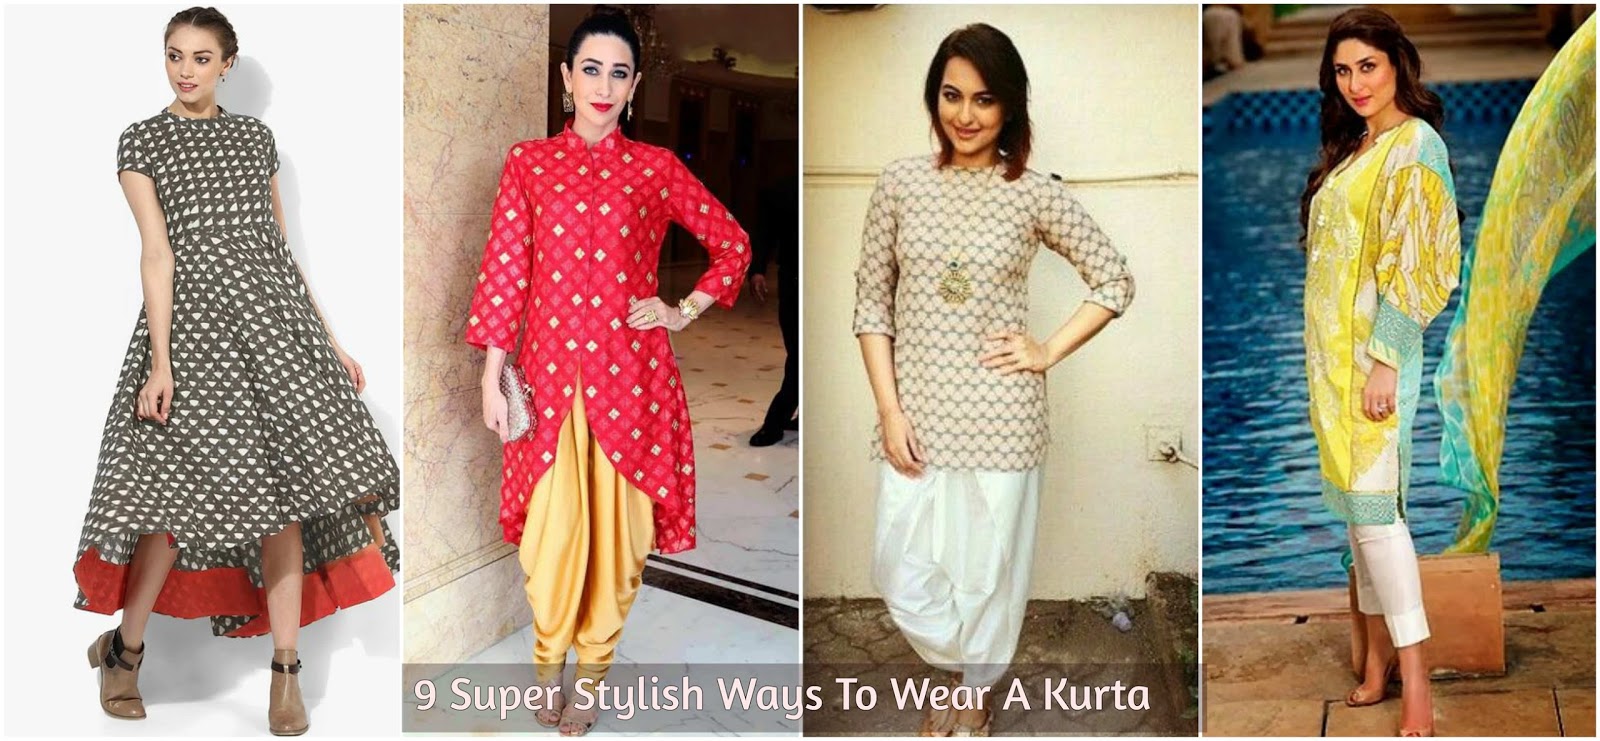 9 Super Stylish Ways To Wear A Kurta